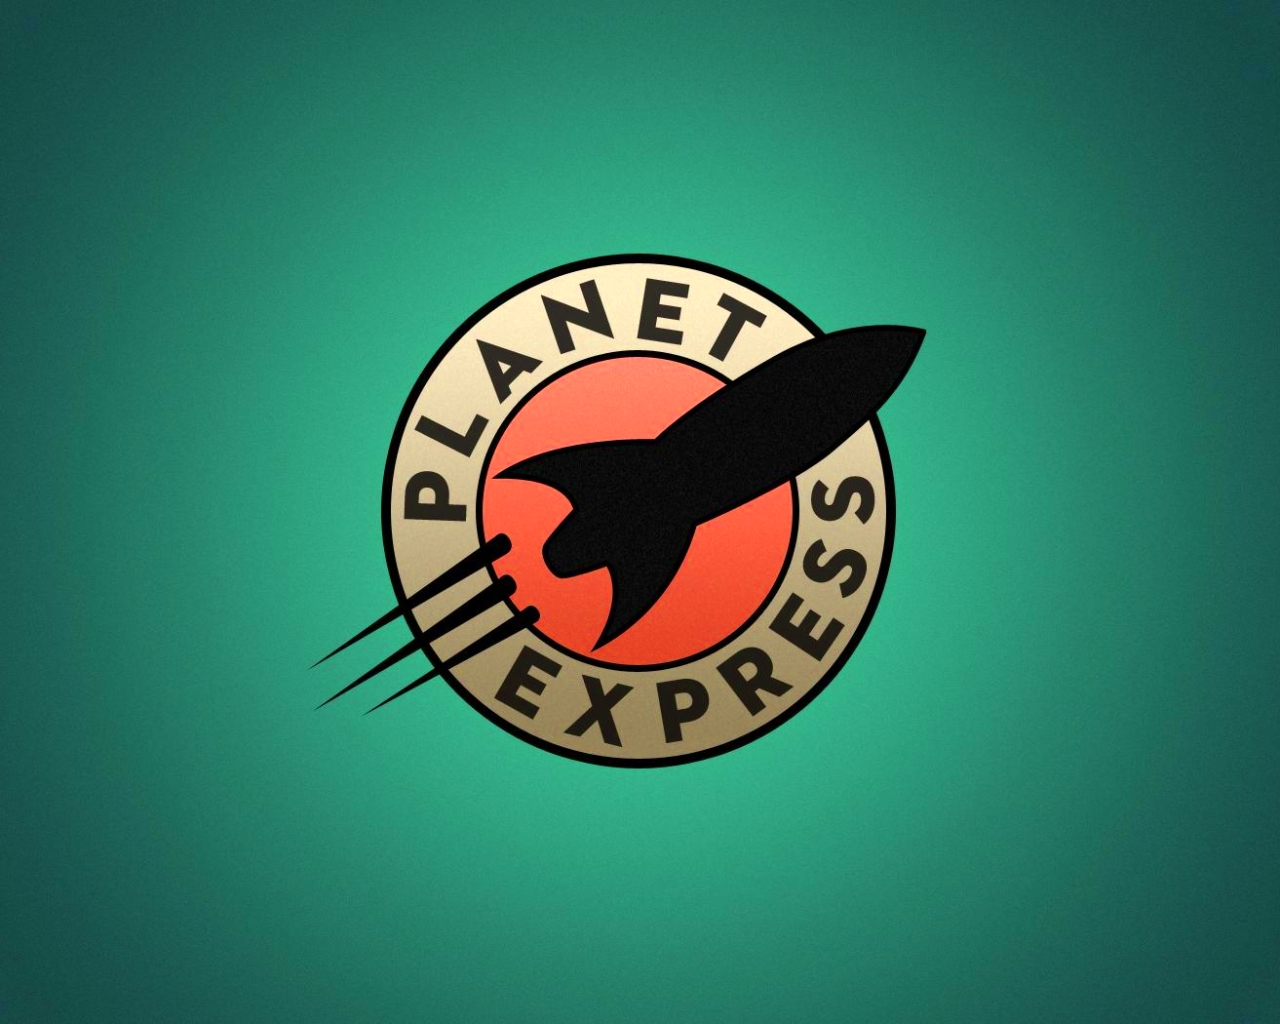 planet express wallpaper,logo,font,graphics,brand,emblem